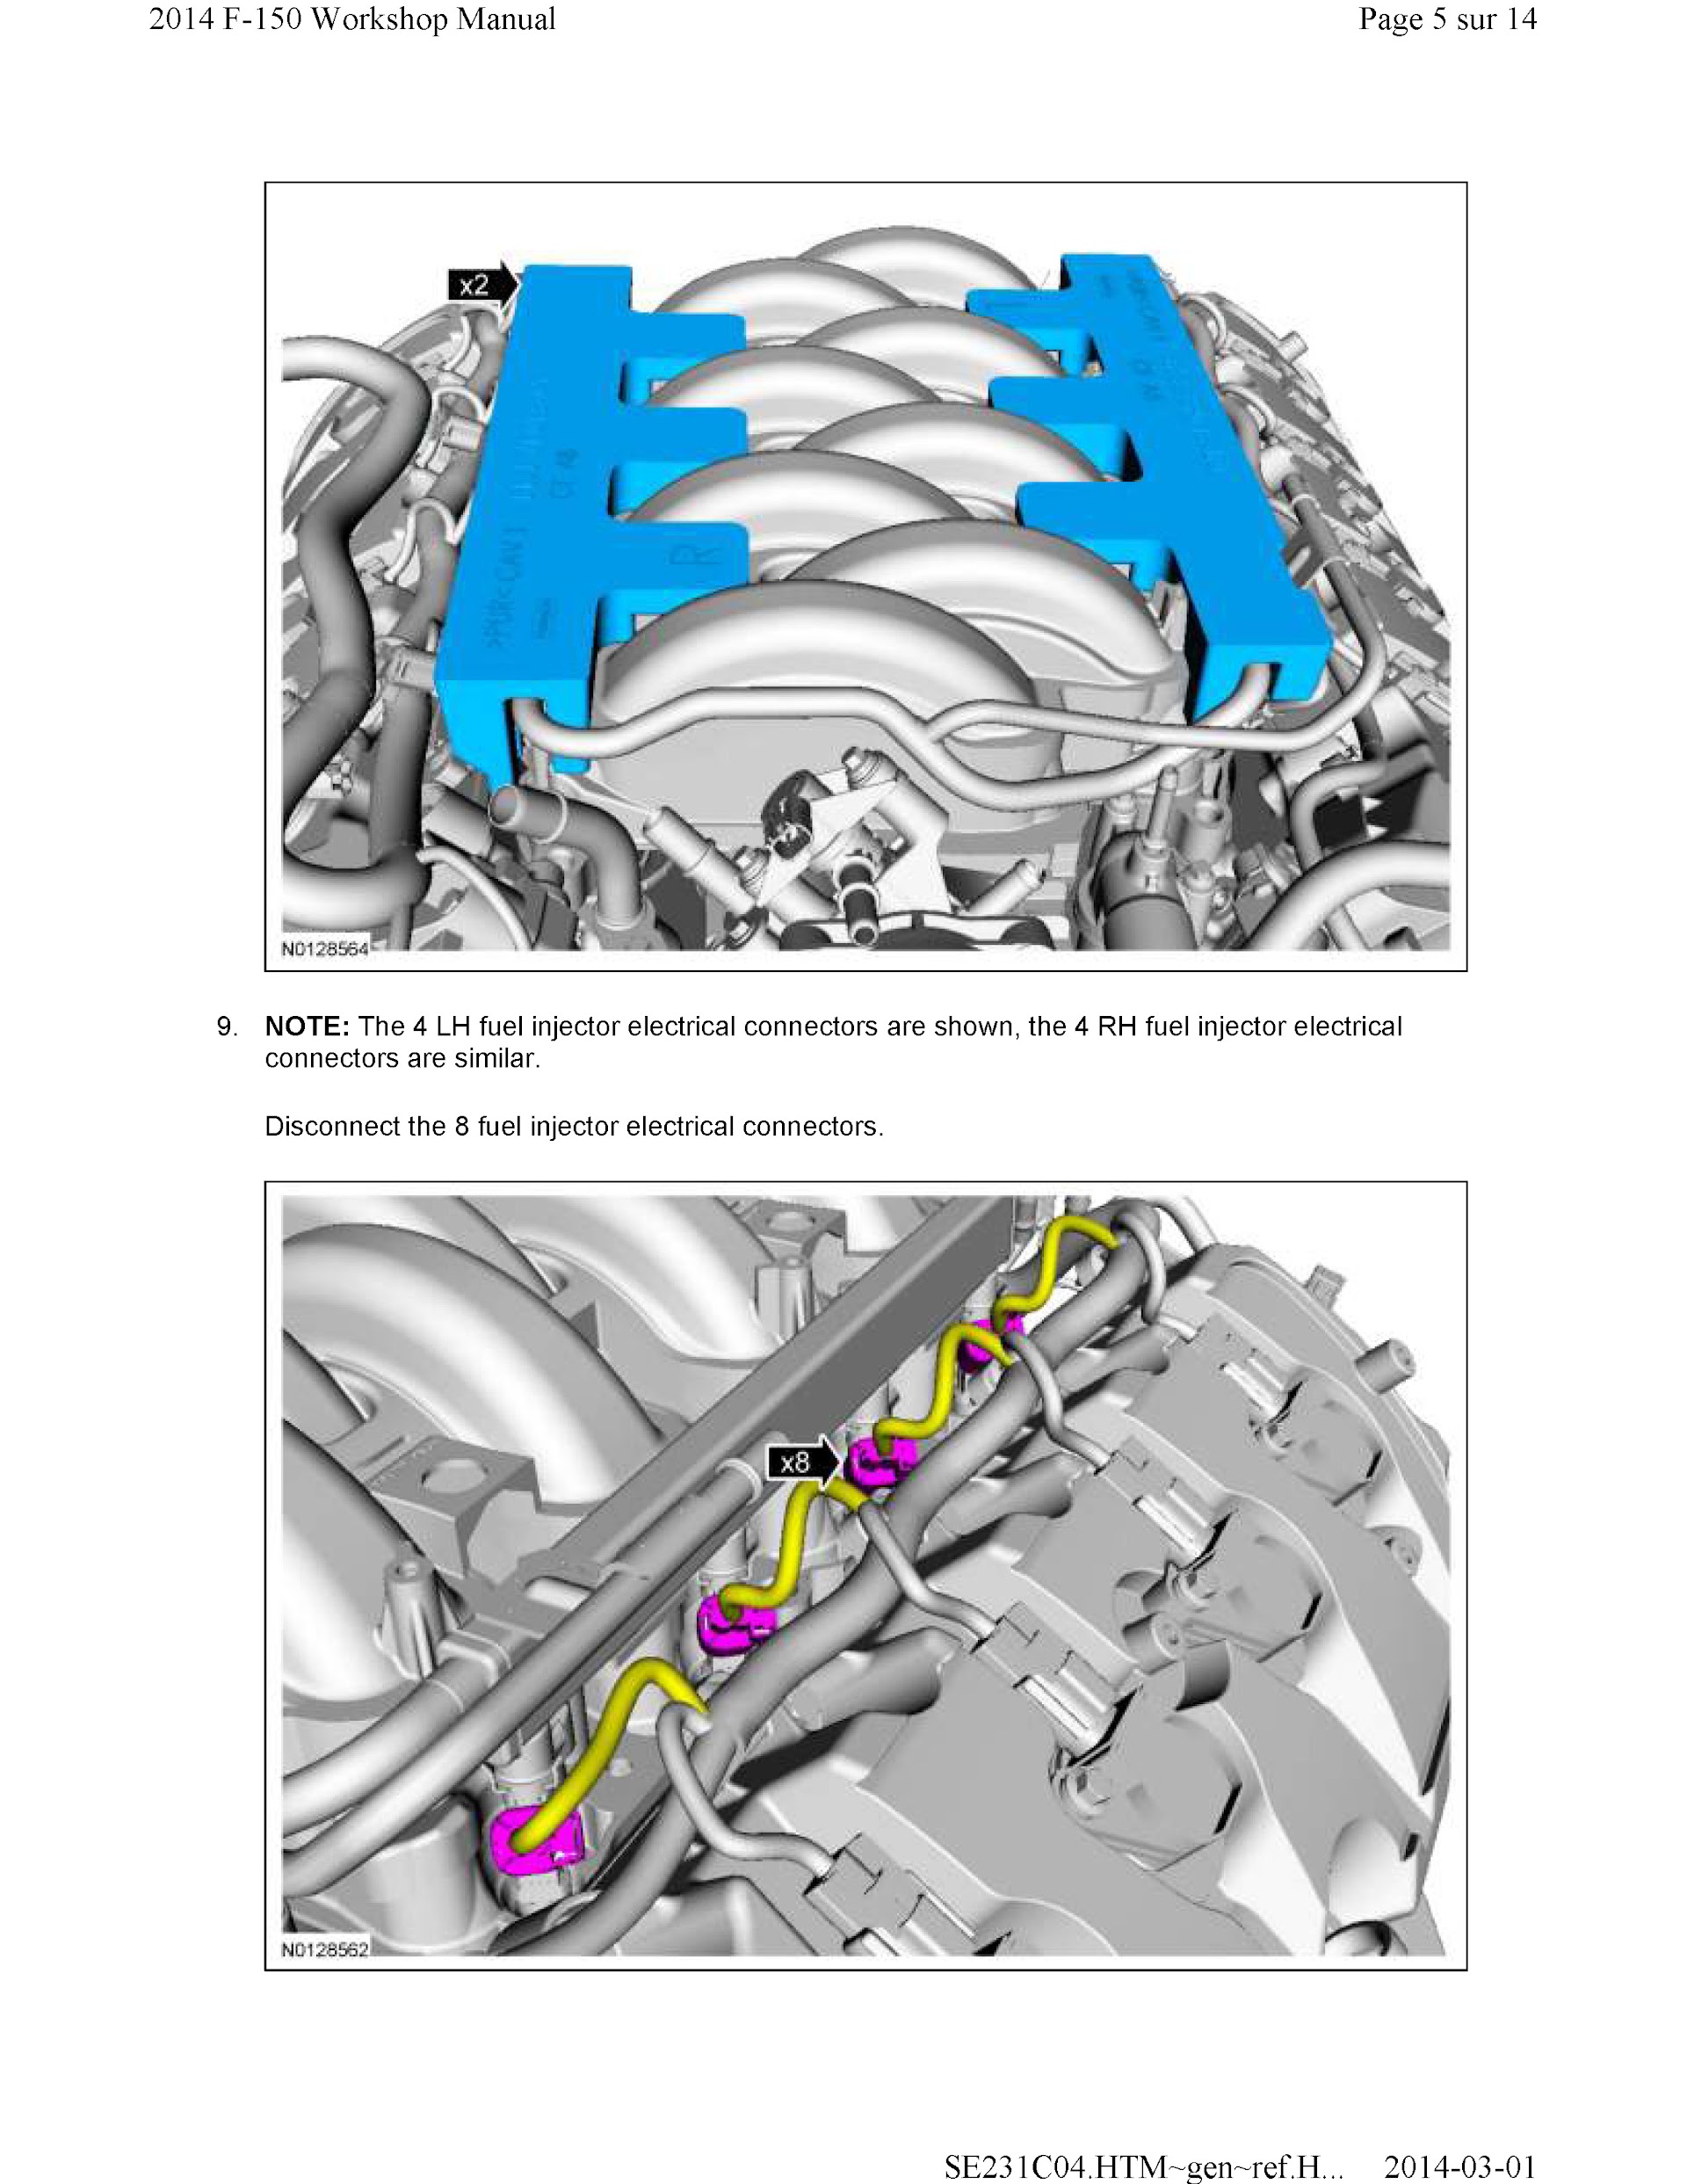 2011-2014 Ford F-150 Repair Manual, Fuel System